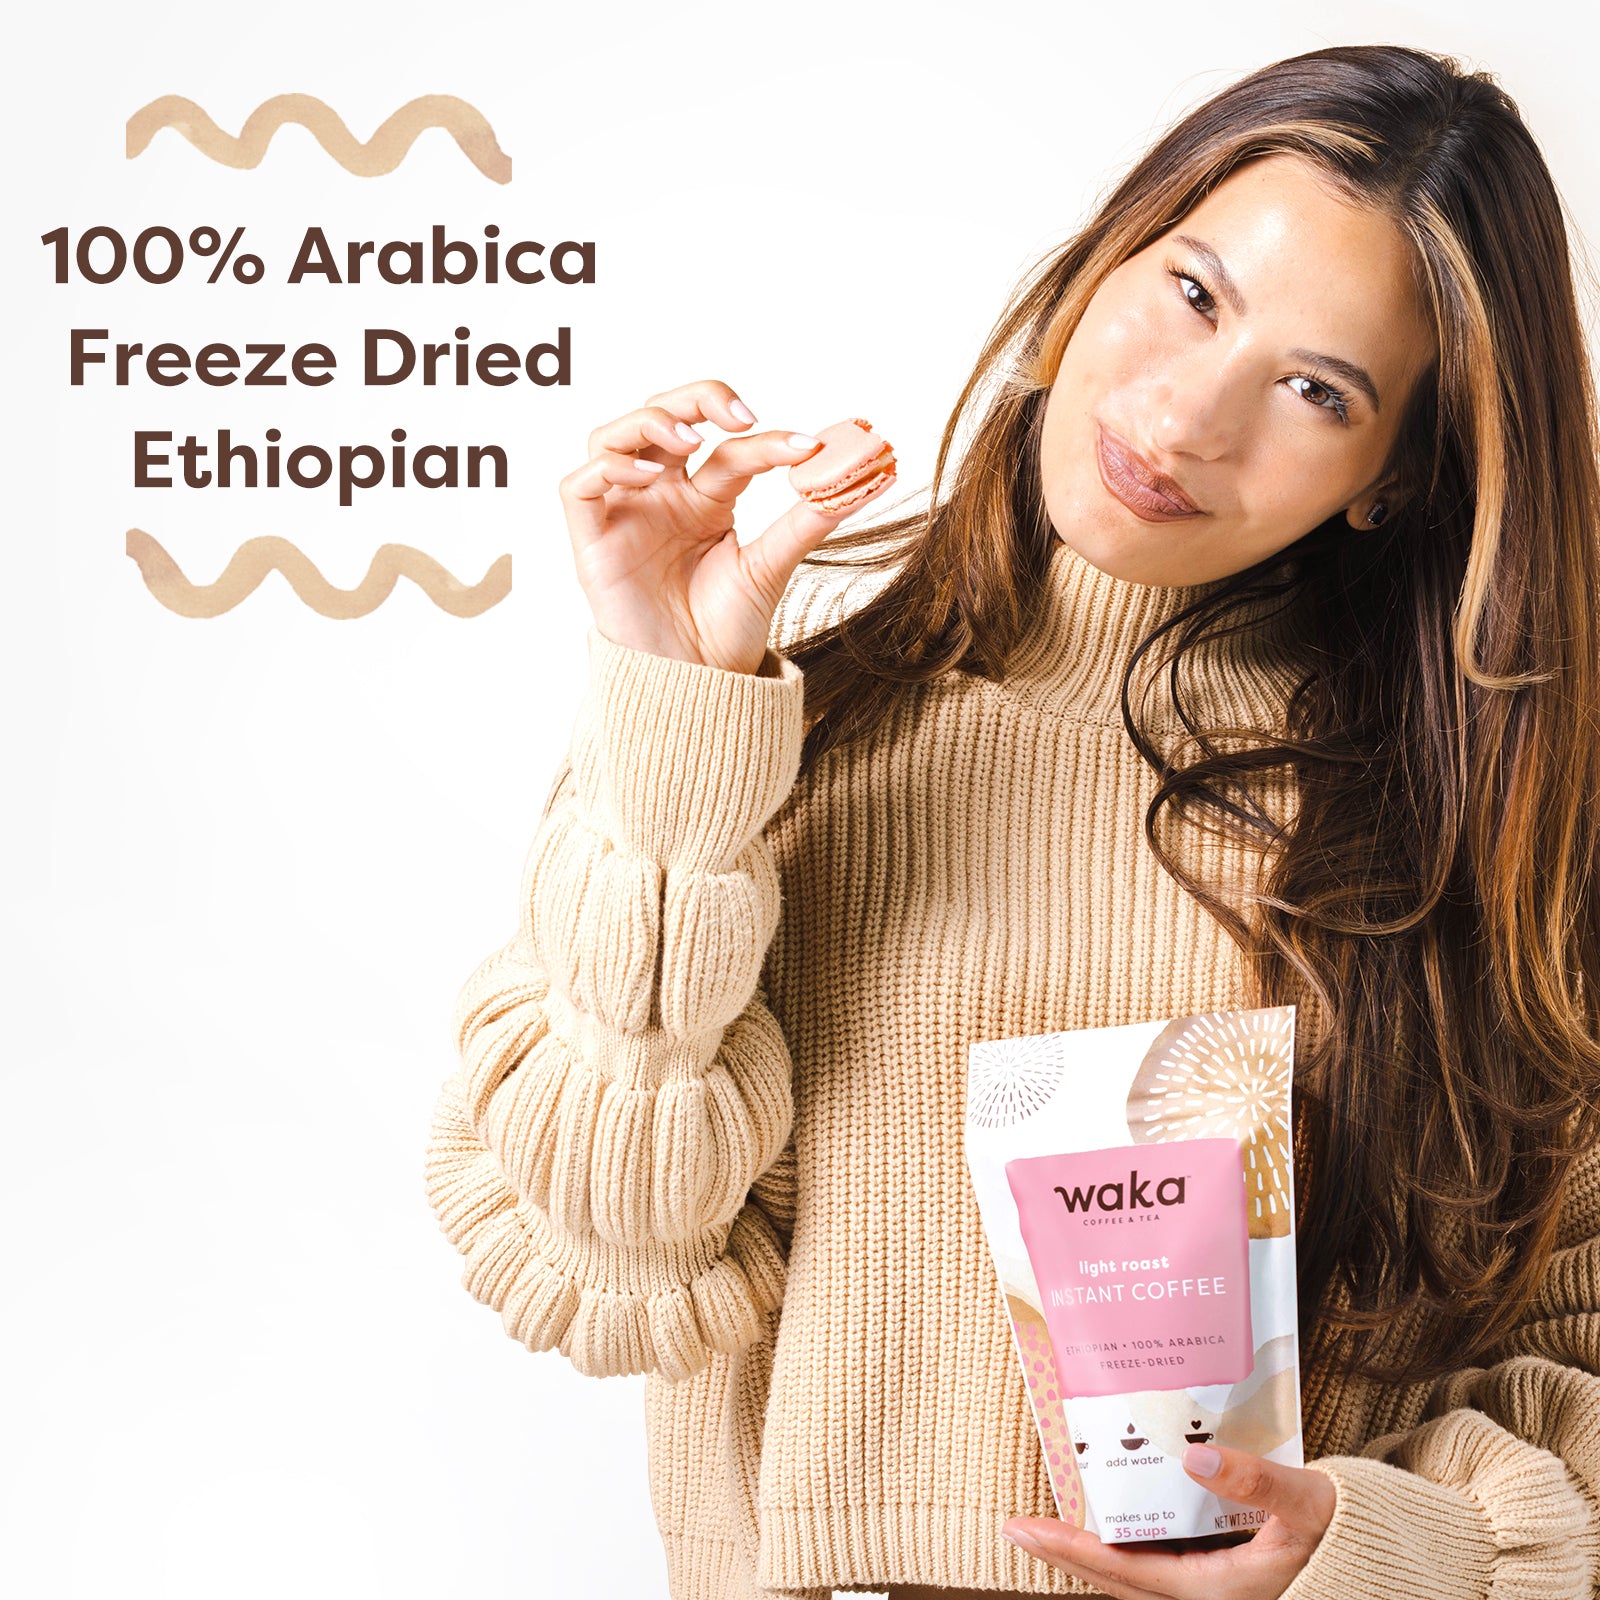 Light Roast Ethiopian Instant Coffee 3.5 oz Bag